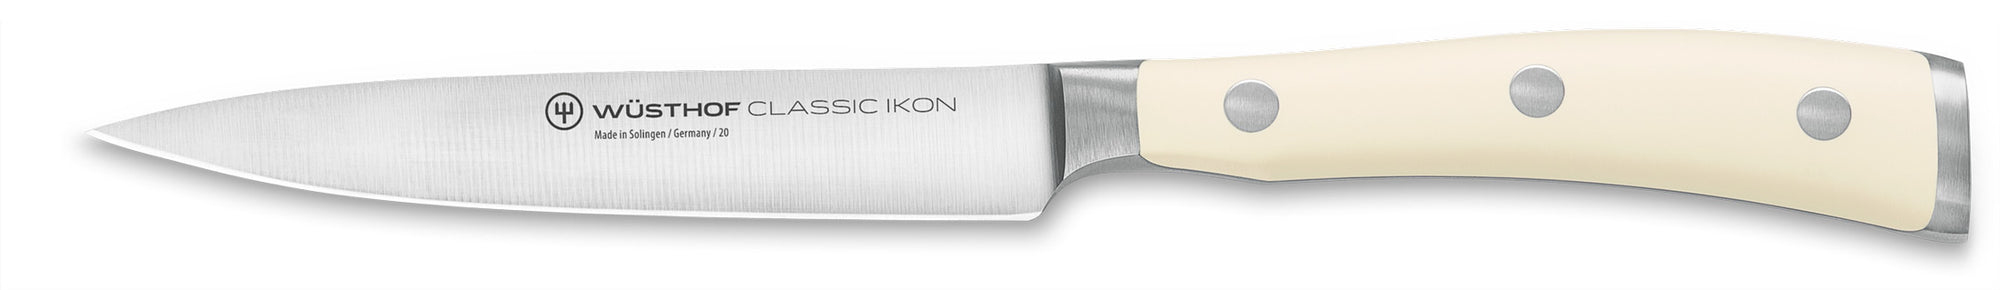 Wusthof Classic IKON Utility Knife, Creme, 4.5-inch (12 cm) - 4086-6/12 Canada